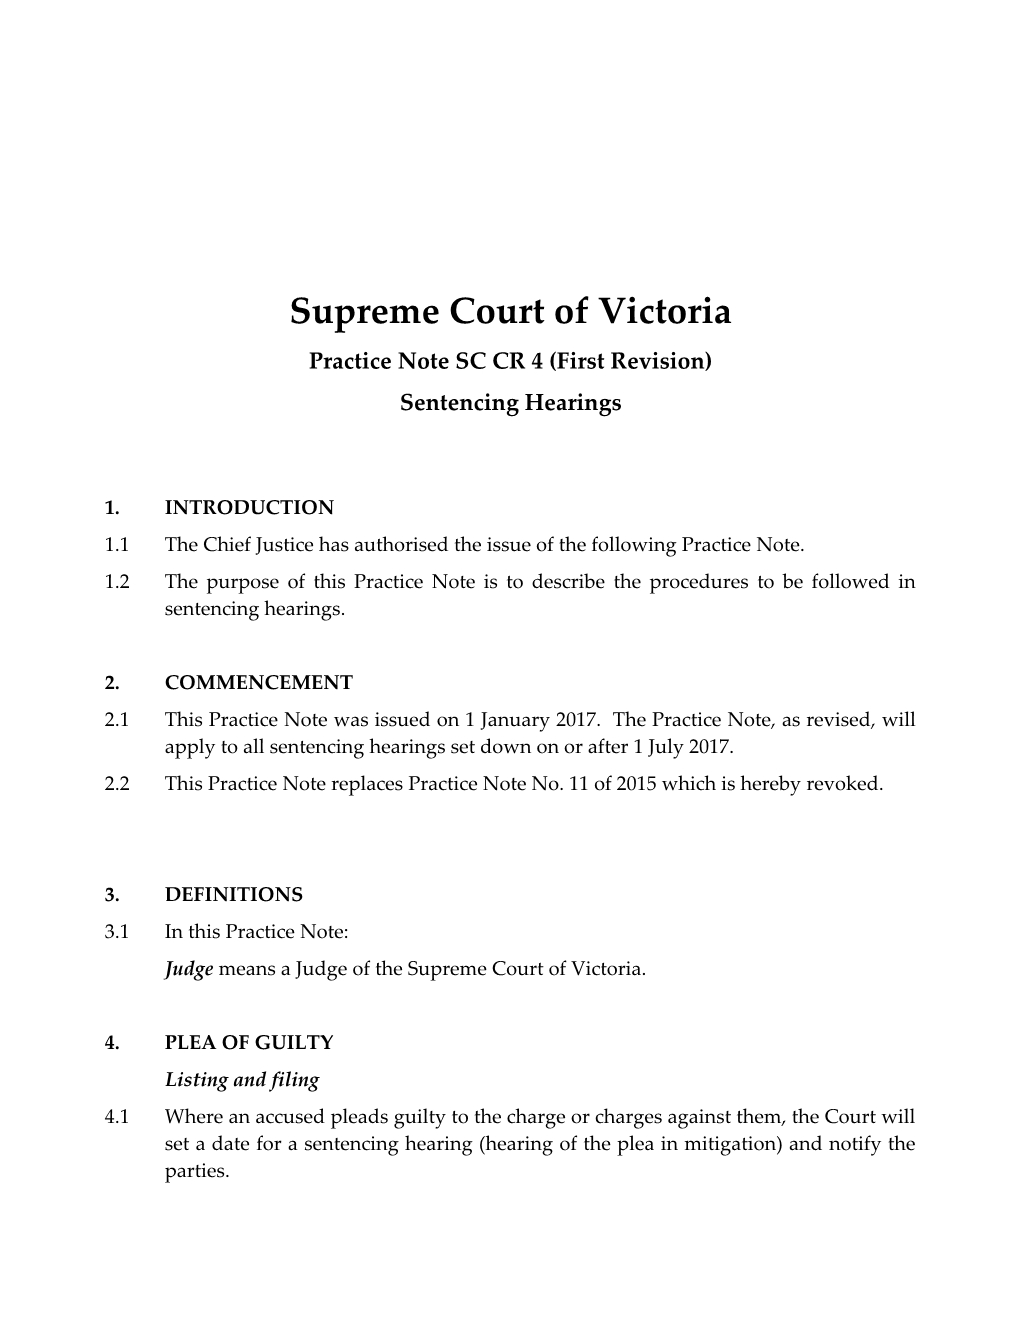 Practice Note No. 11 of 2015 Sentencing Hearings